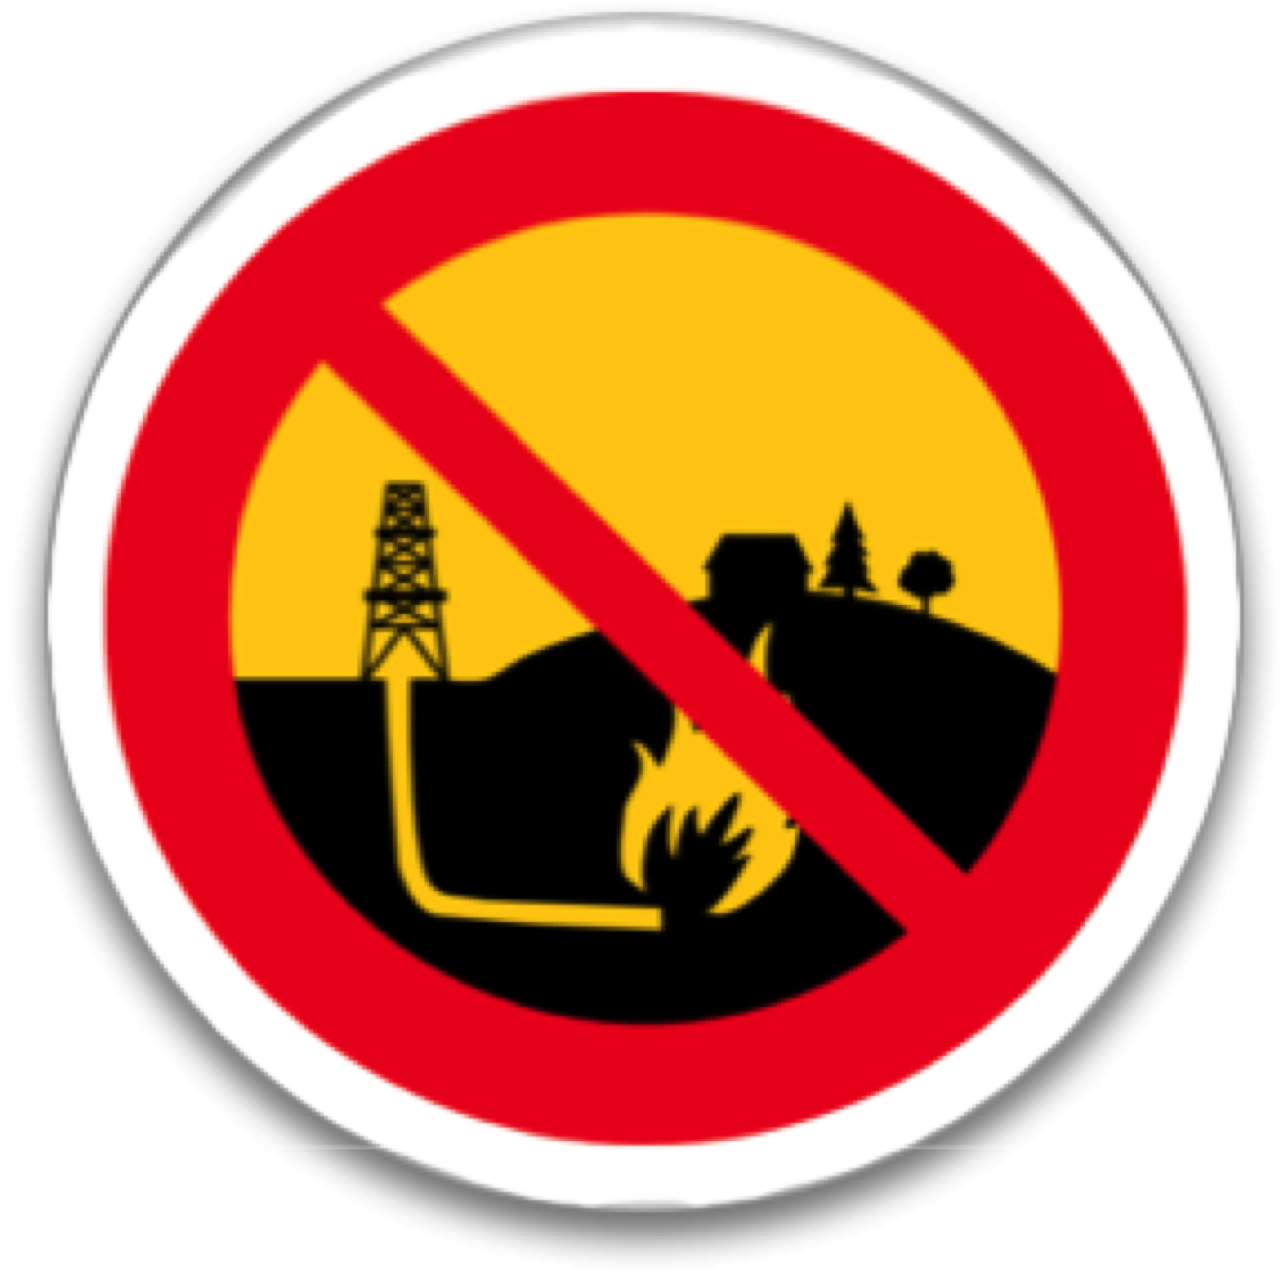 Nofracking Button Image - No Fracking (1280x1272)